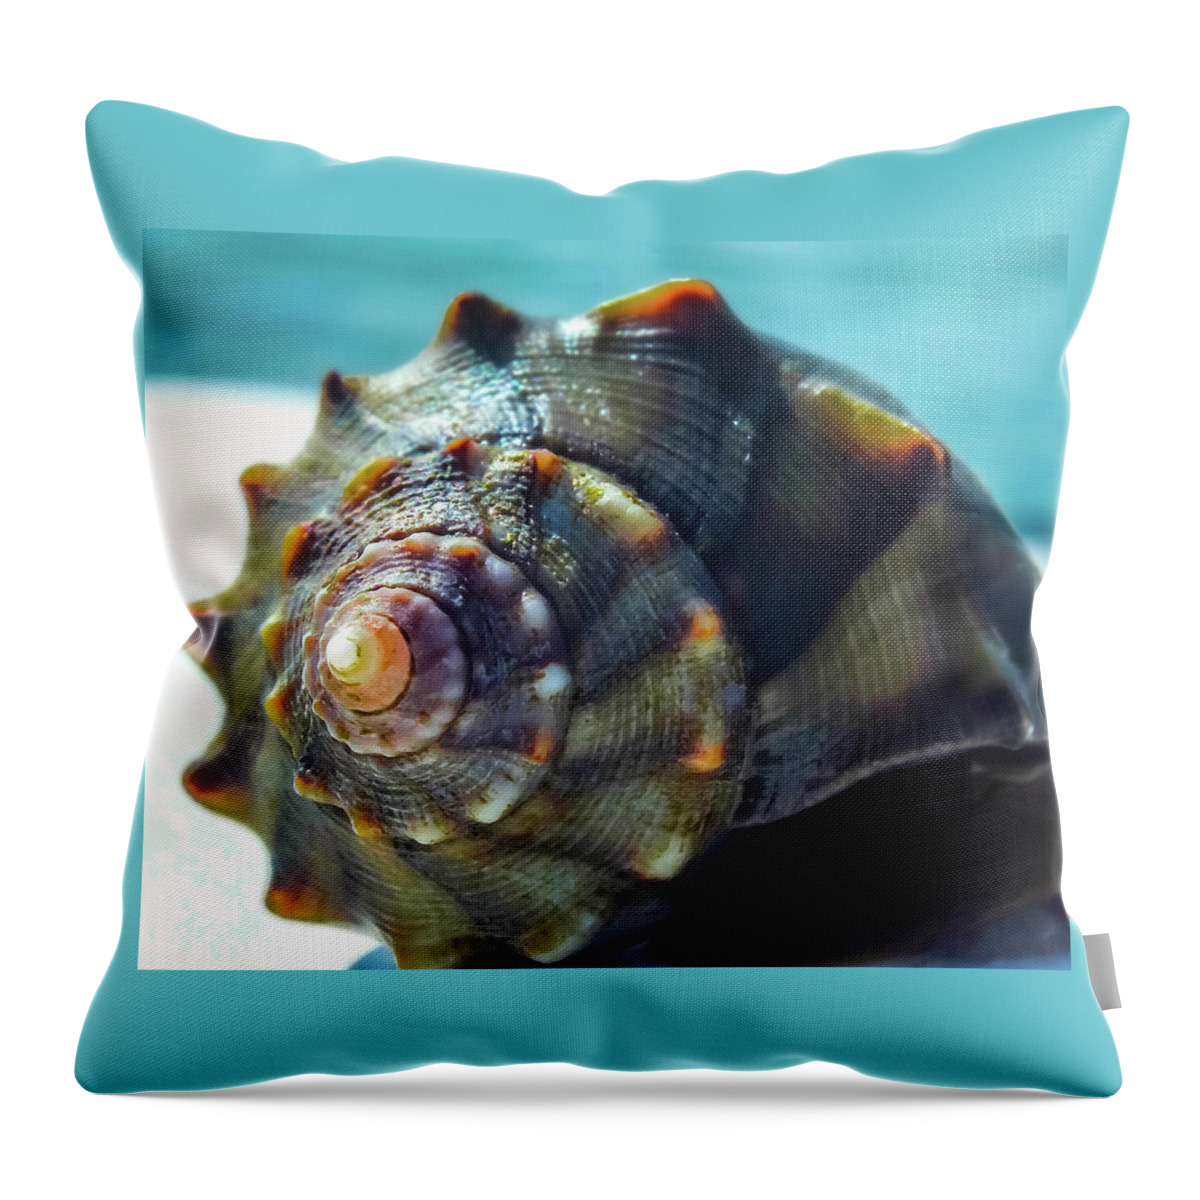 Caribbean Seashells Throw Pillow featuring the photograph Caribbean Treasure by Karen Wiles